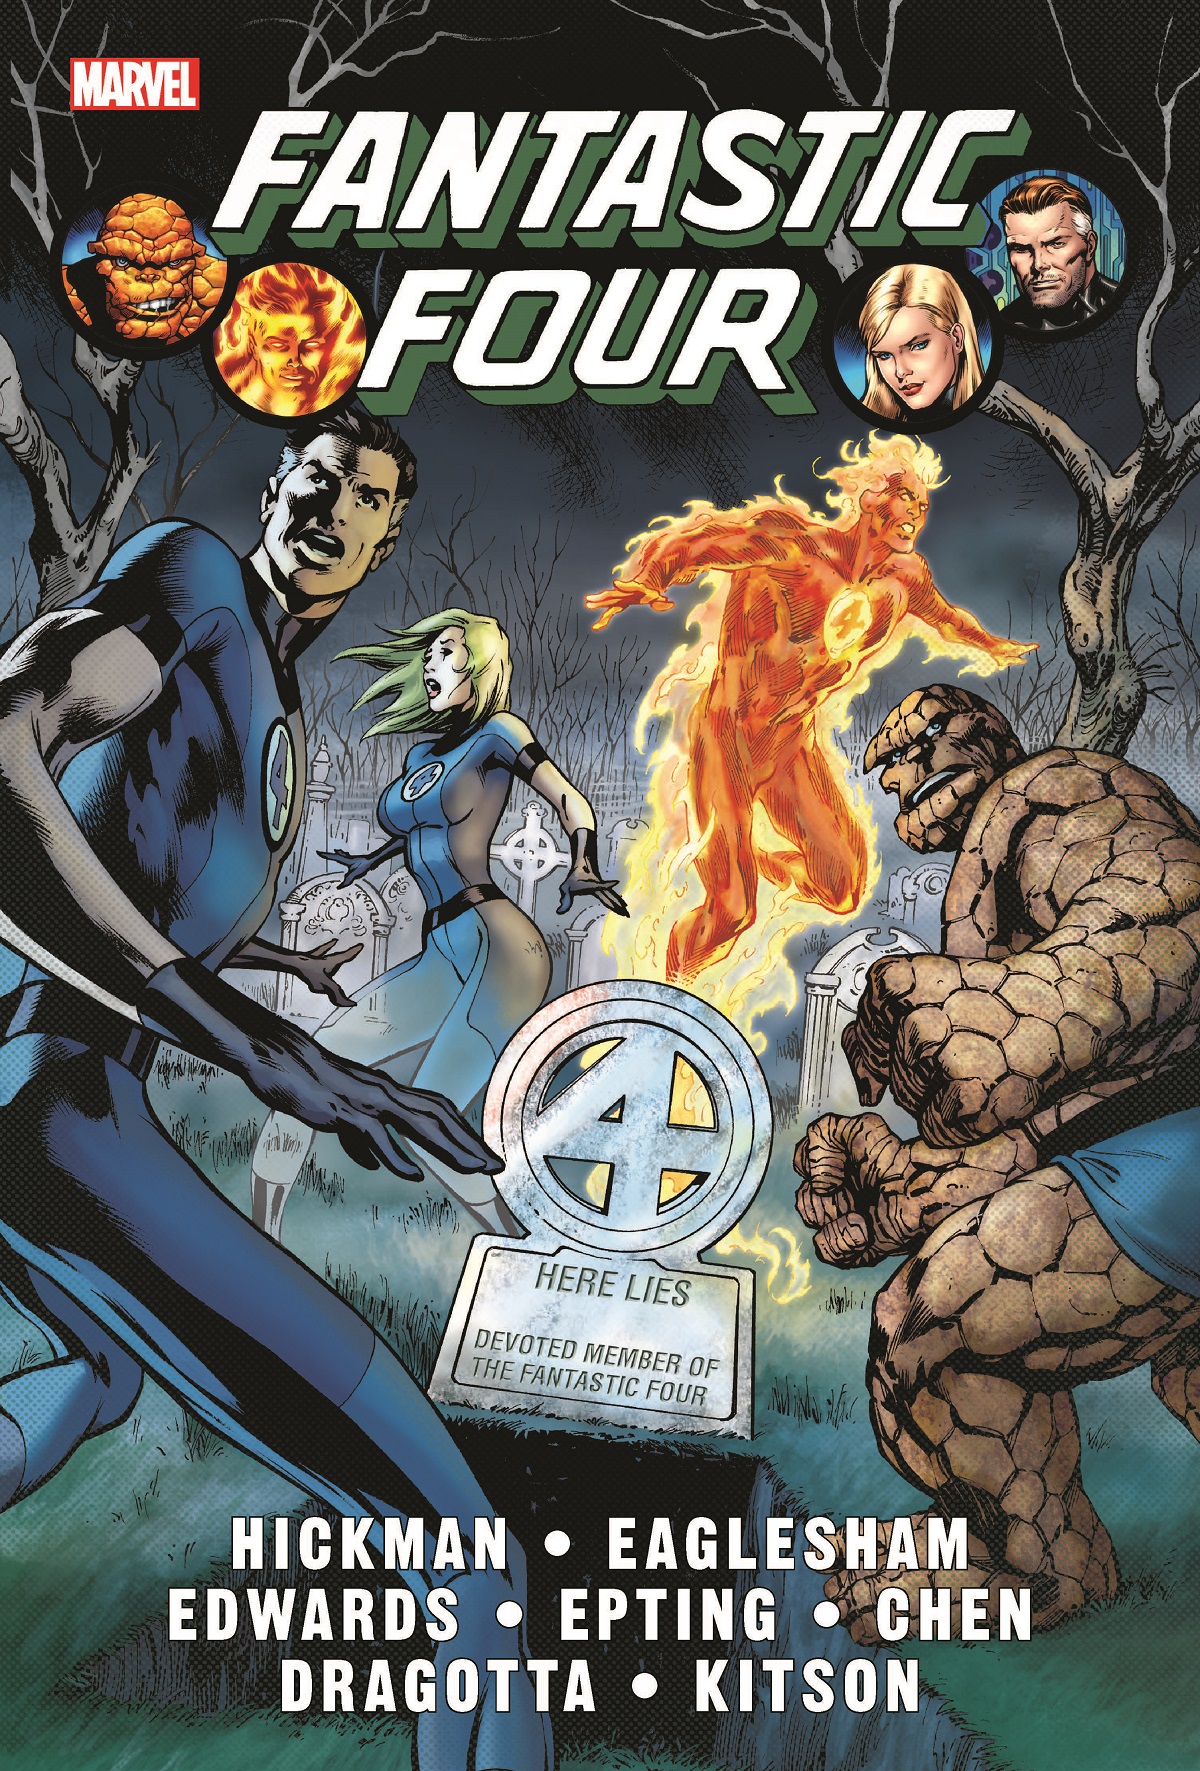 Fantastic Four By Jonathan Hickman Omnibus Vol. 1 (Trade Paperback)